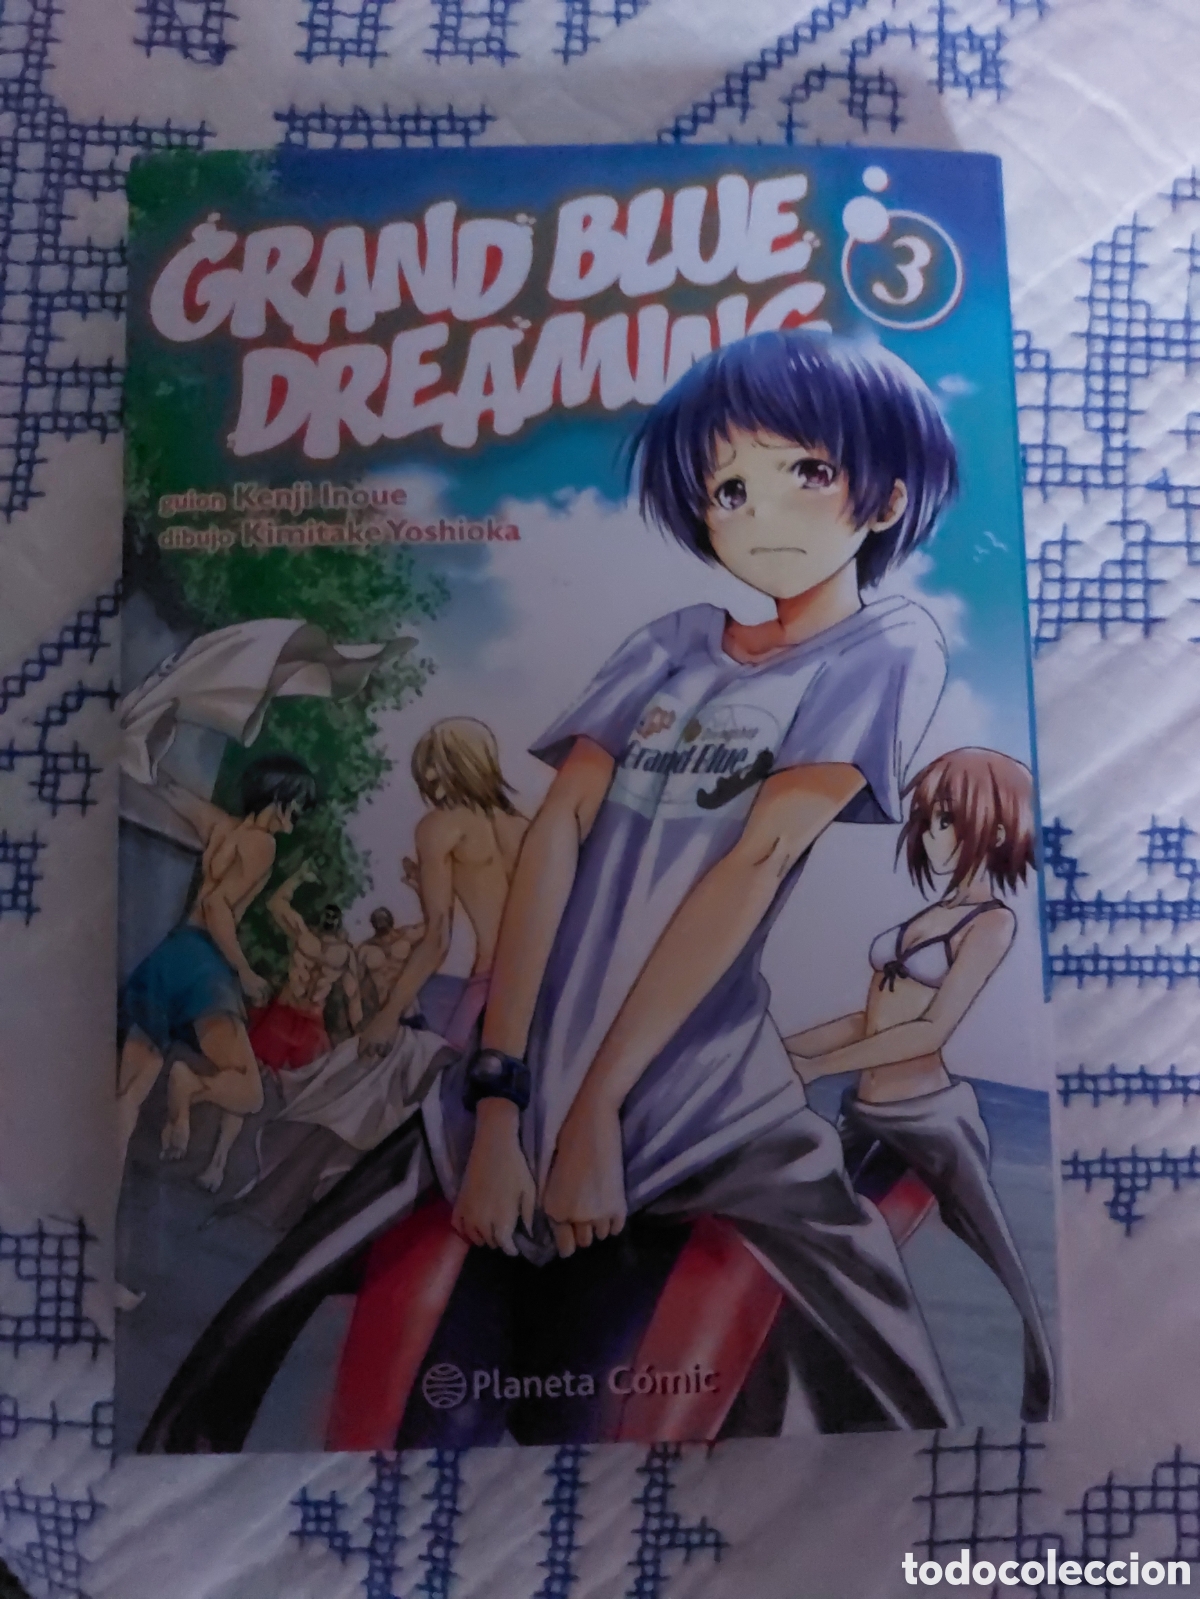 Grand Blue Dreaming, Volume 18